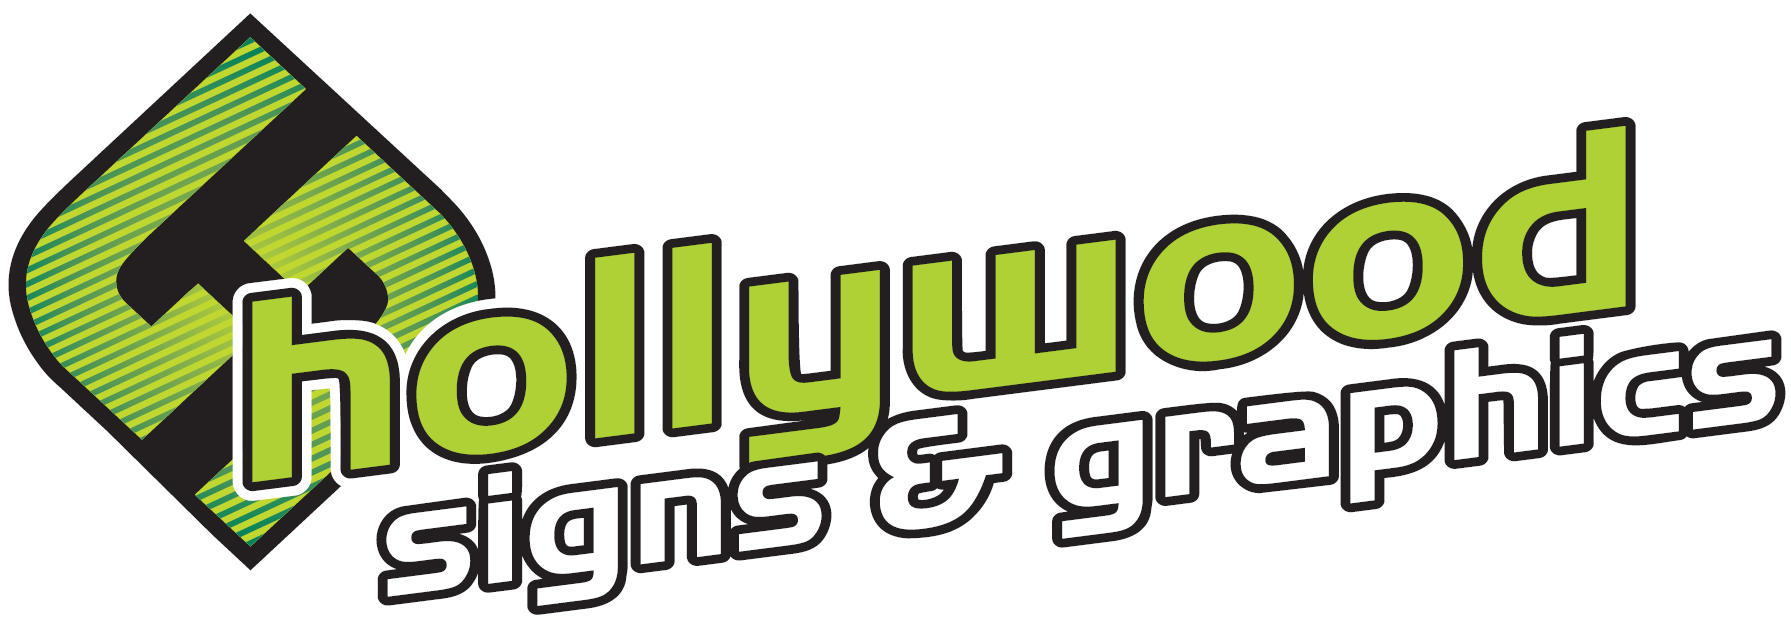 Hollywood Signs & Graphics Logo